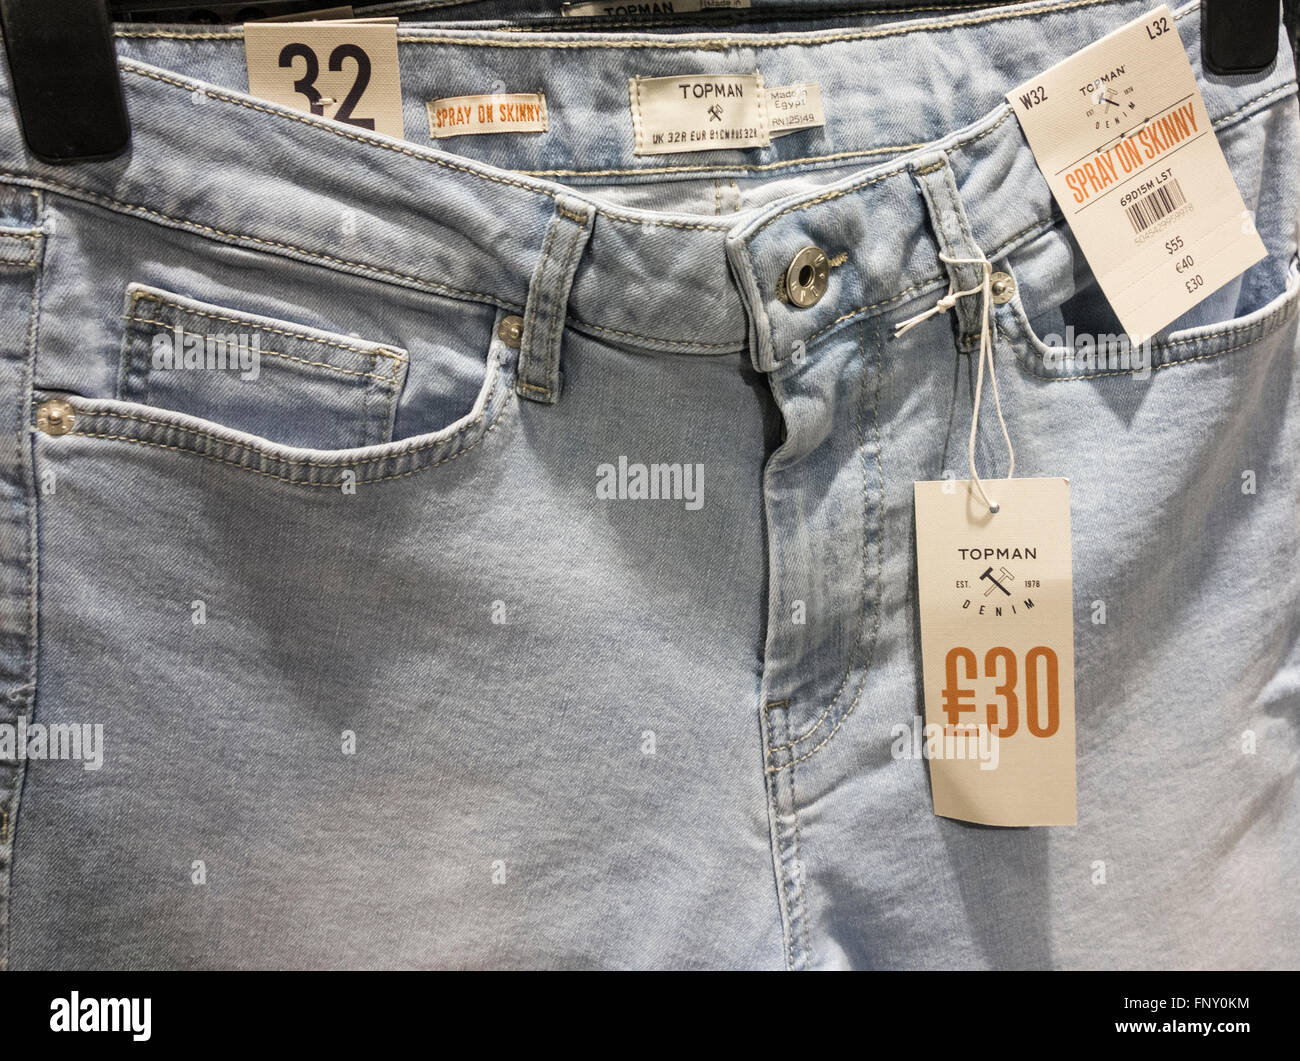 Spray on Skinny jeans in Topman store. UK Stock Photo - Alamy